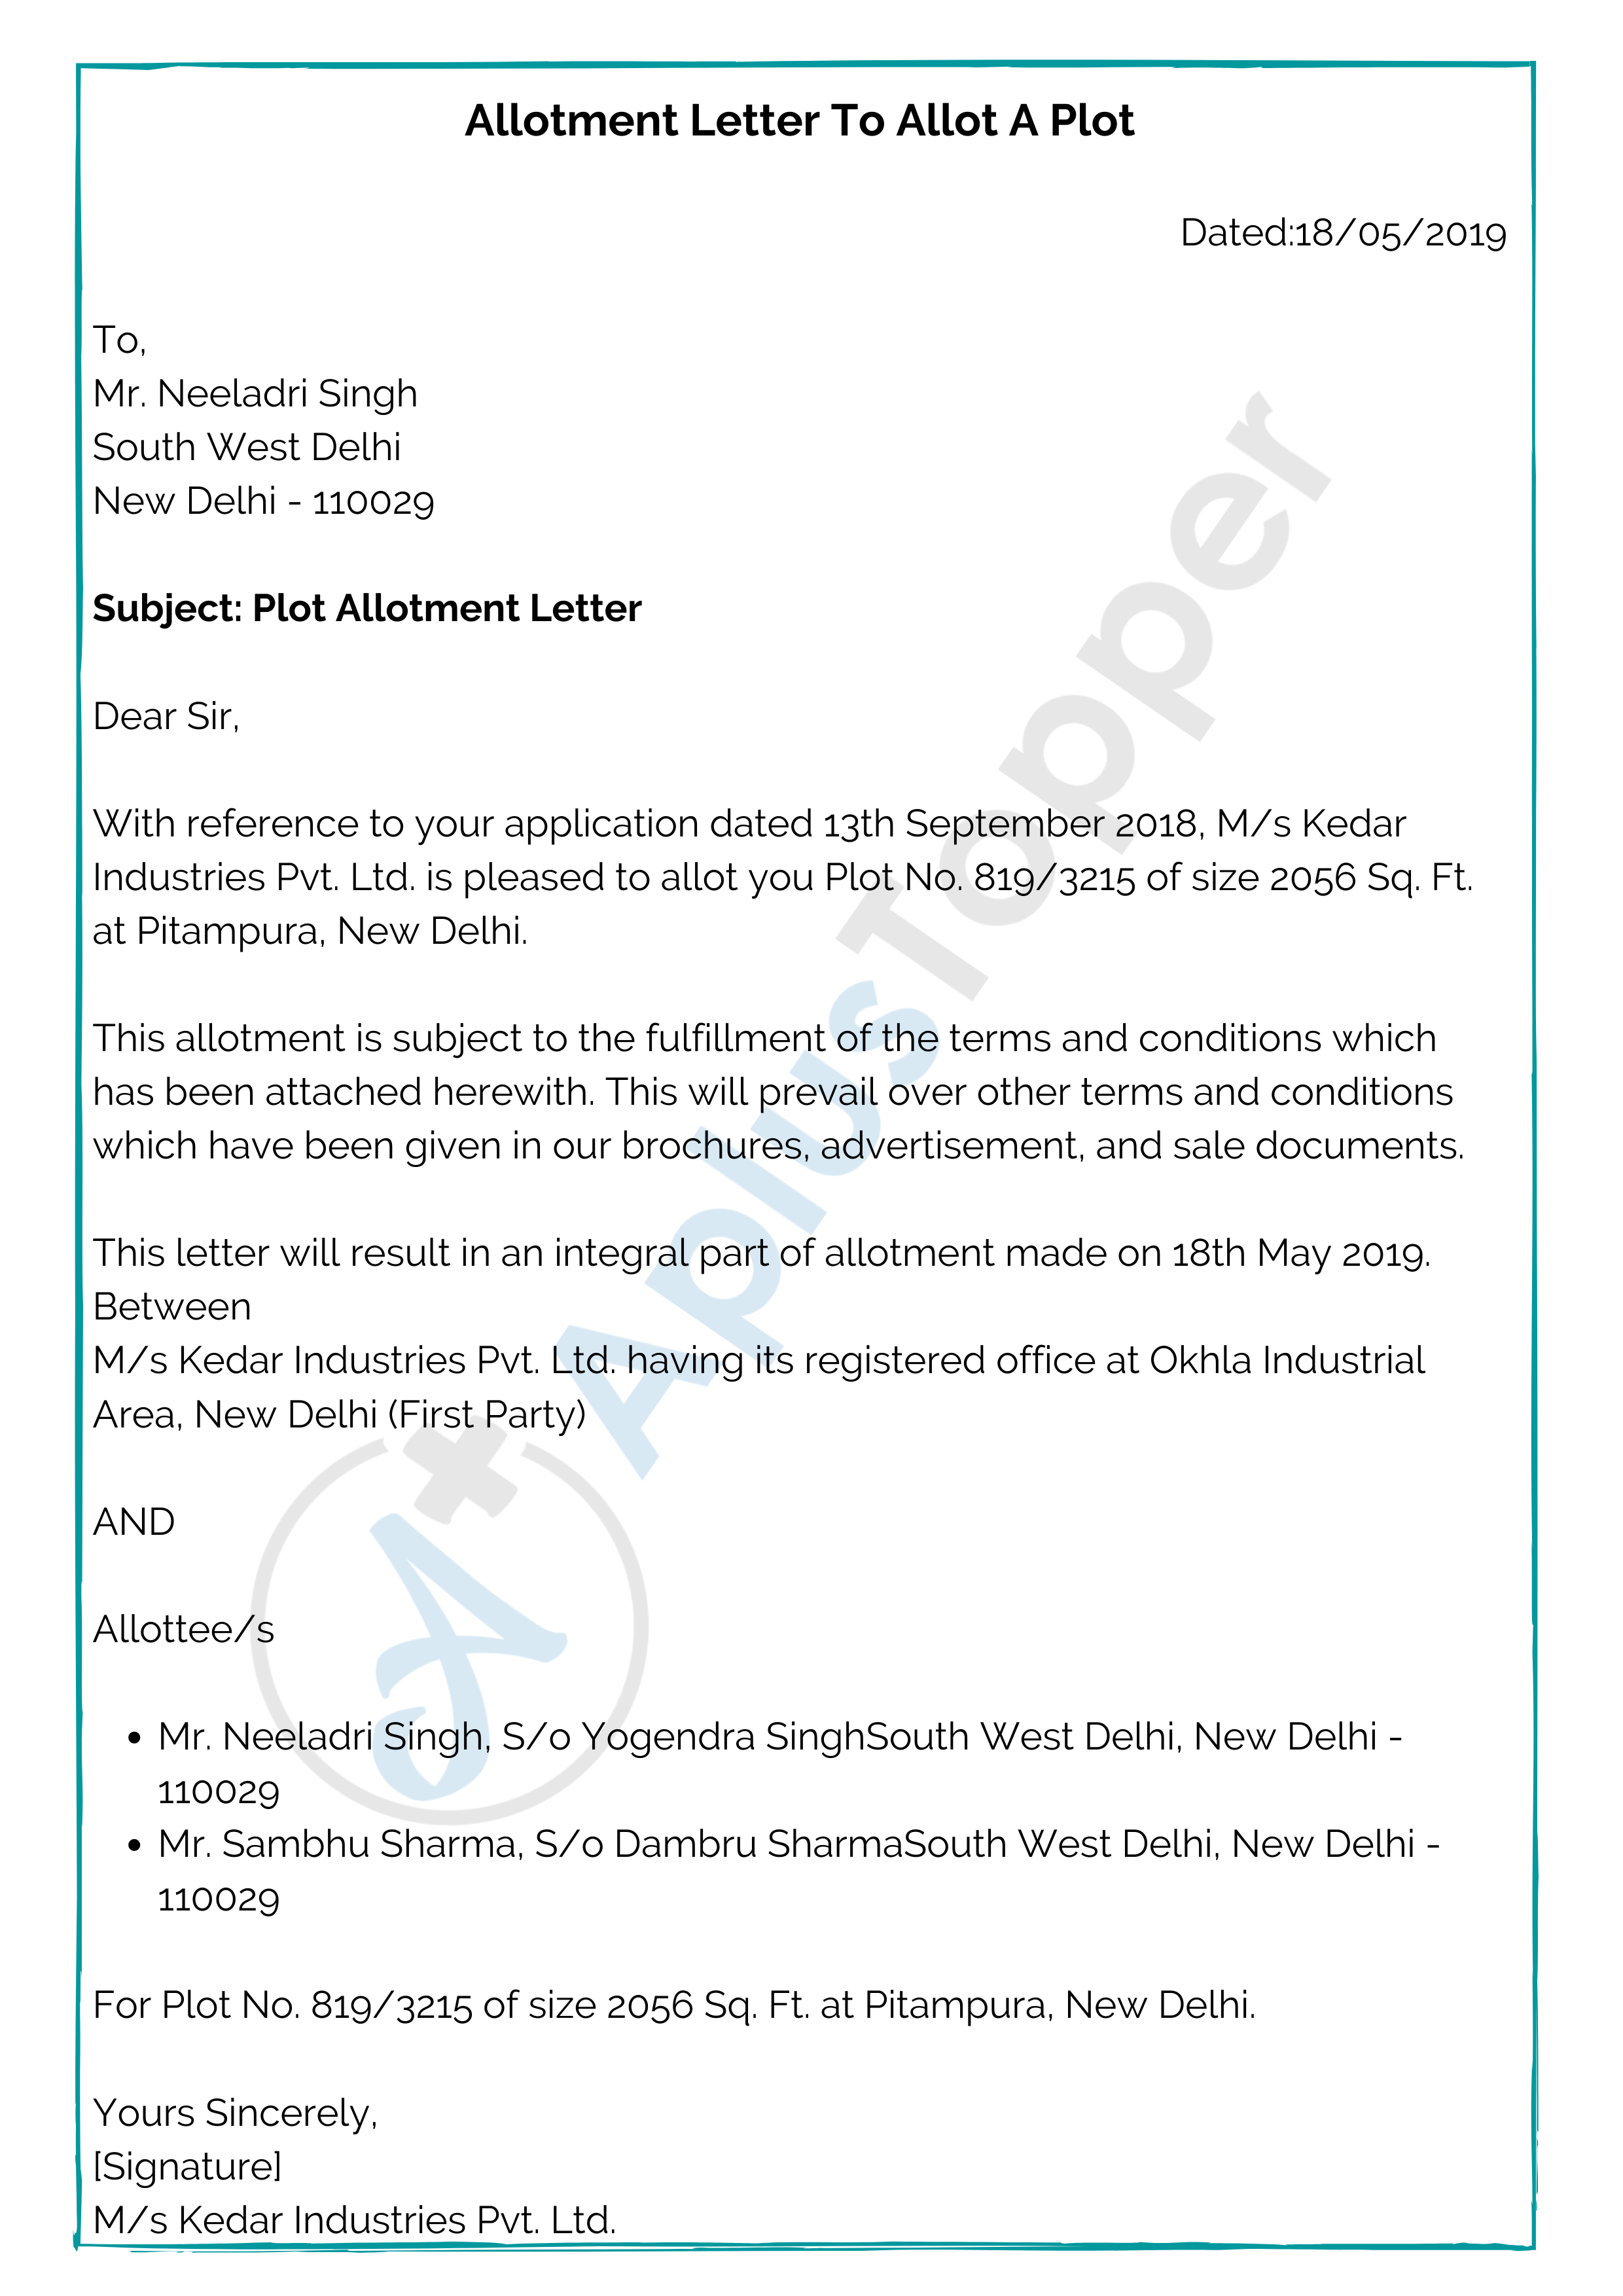 Sample Allotment Letter To Allot A Plot